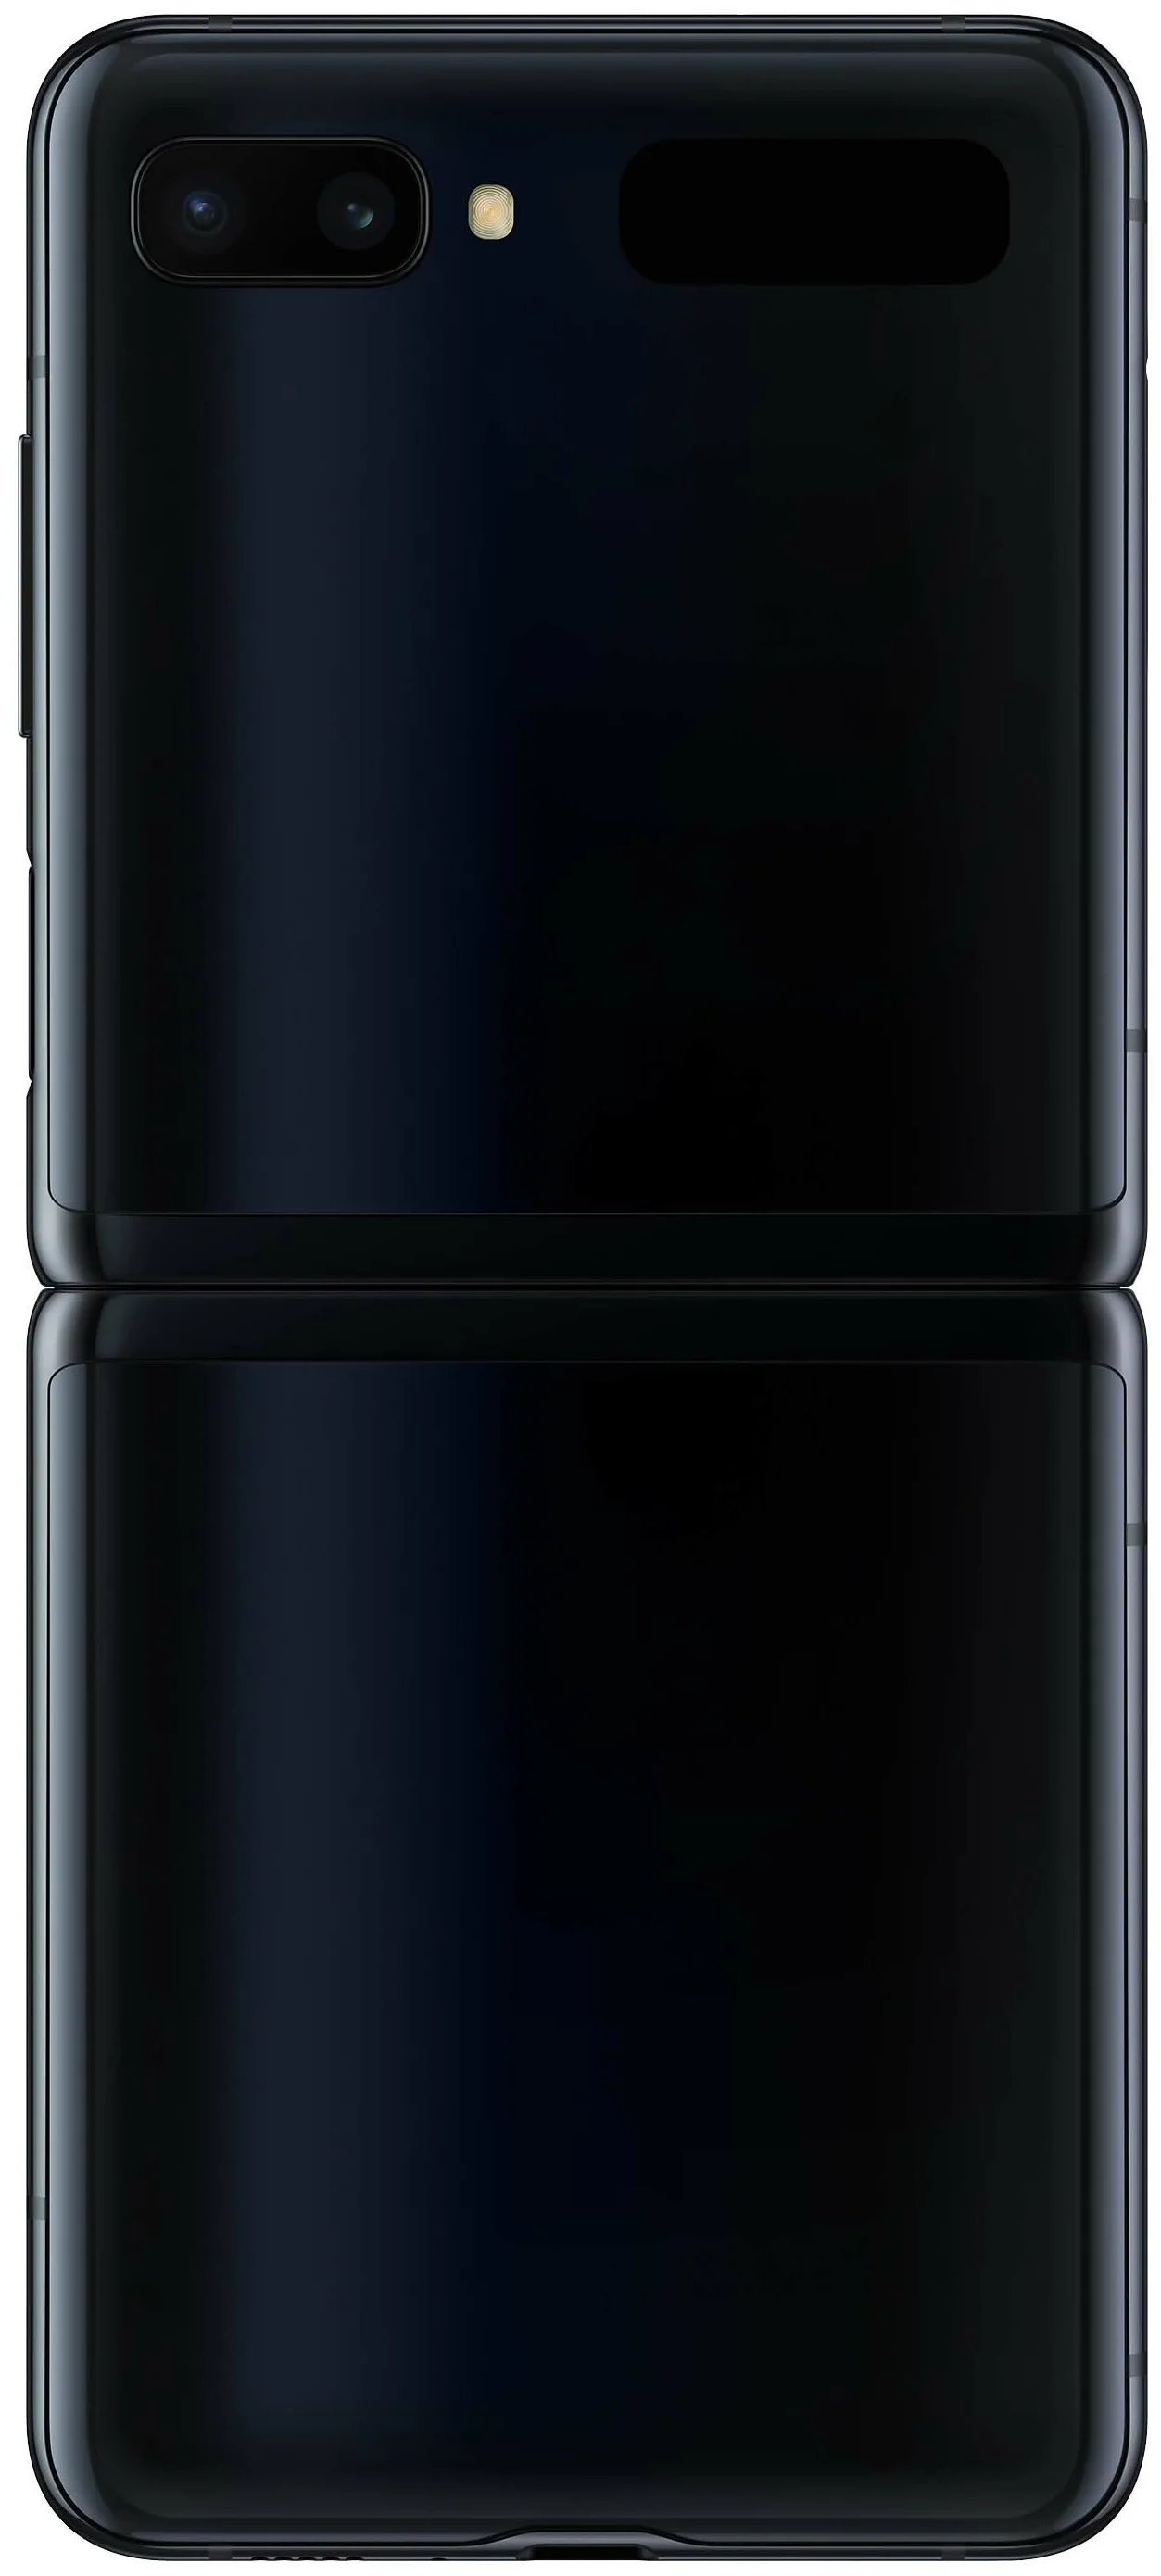 Samsung Galaxy Z Flip - процессор: Qualcomm Snapdragon 855 Plus